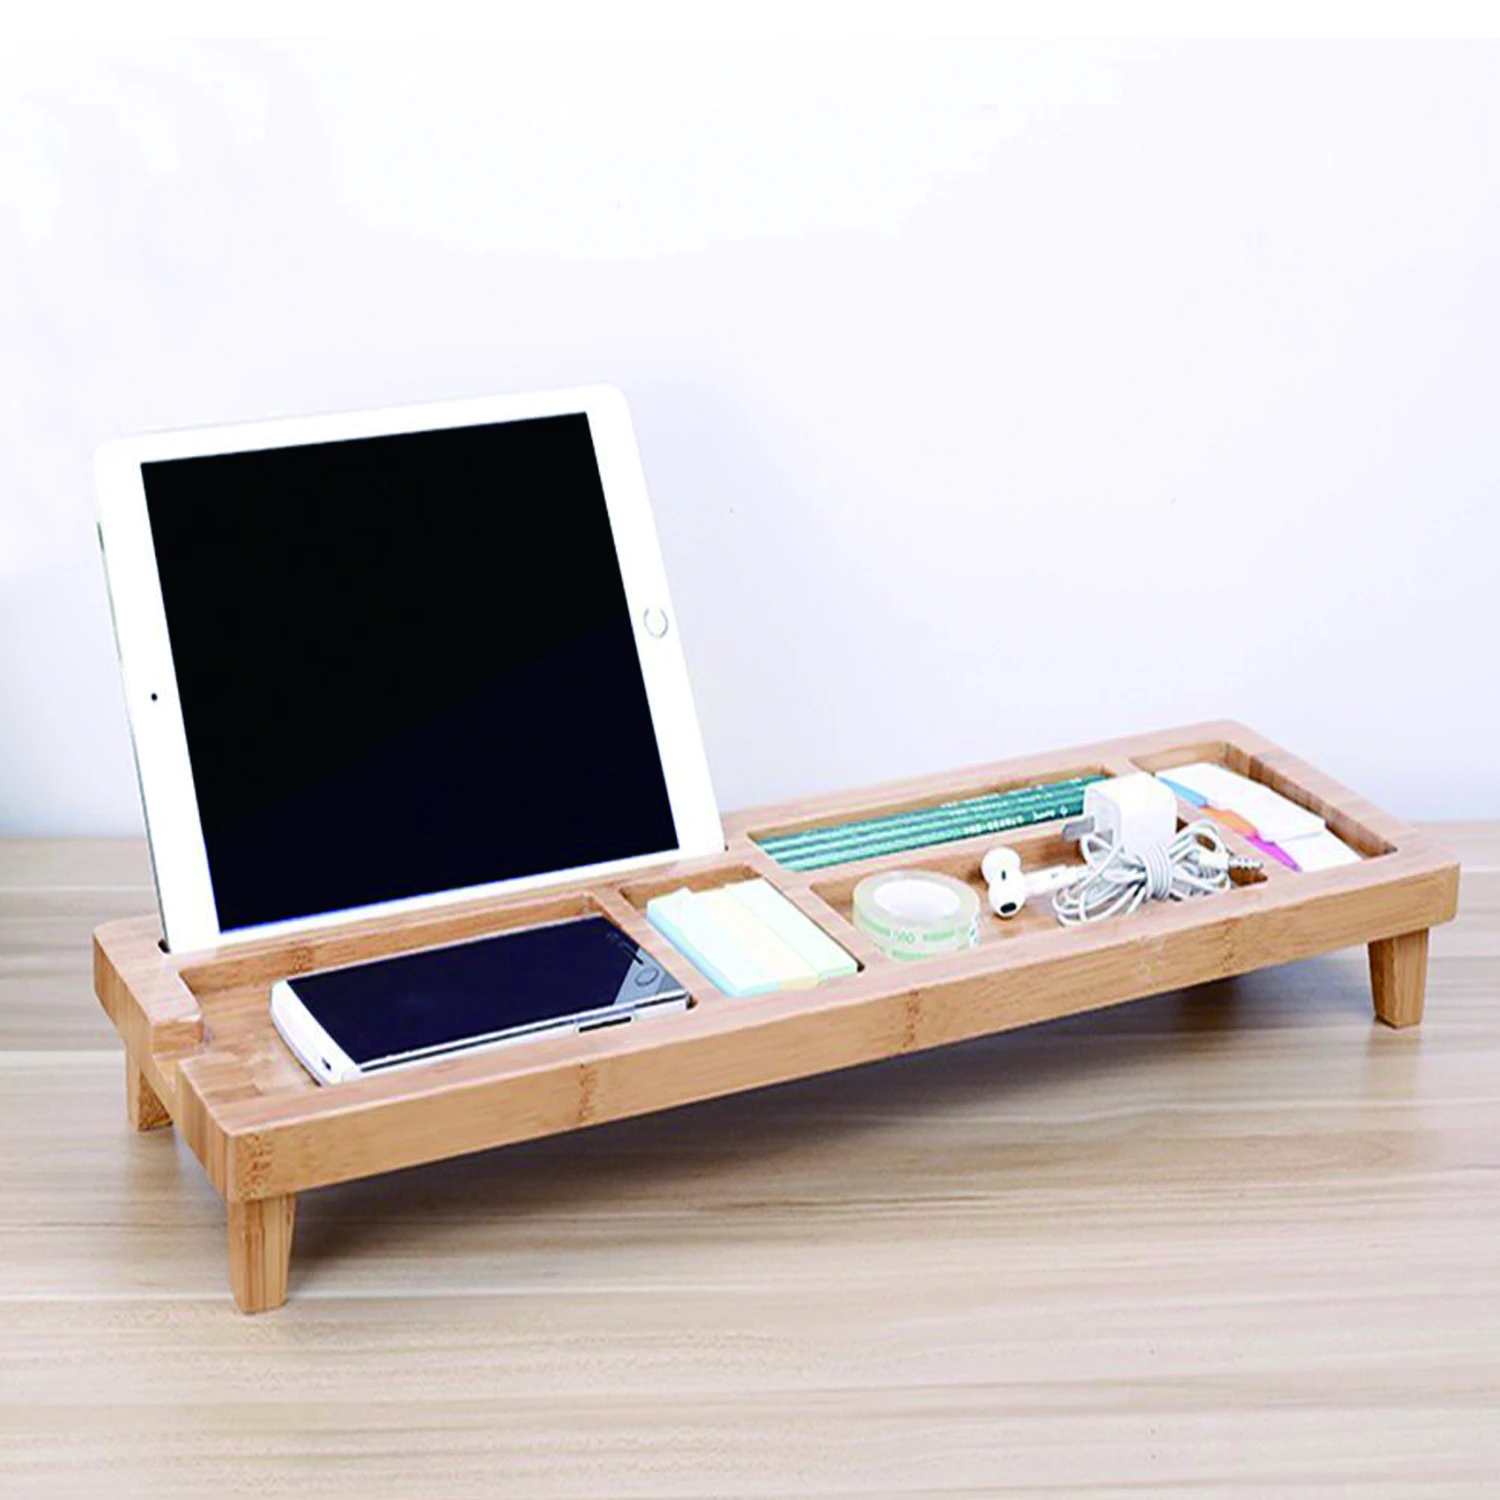 Bamboo Desk Organizer Tray for Saving Space, Office Desktop Small Objects Storage Holder Hide Keyboard Wood Shelf